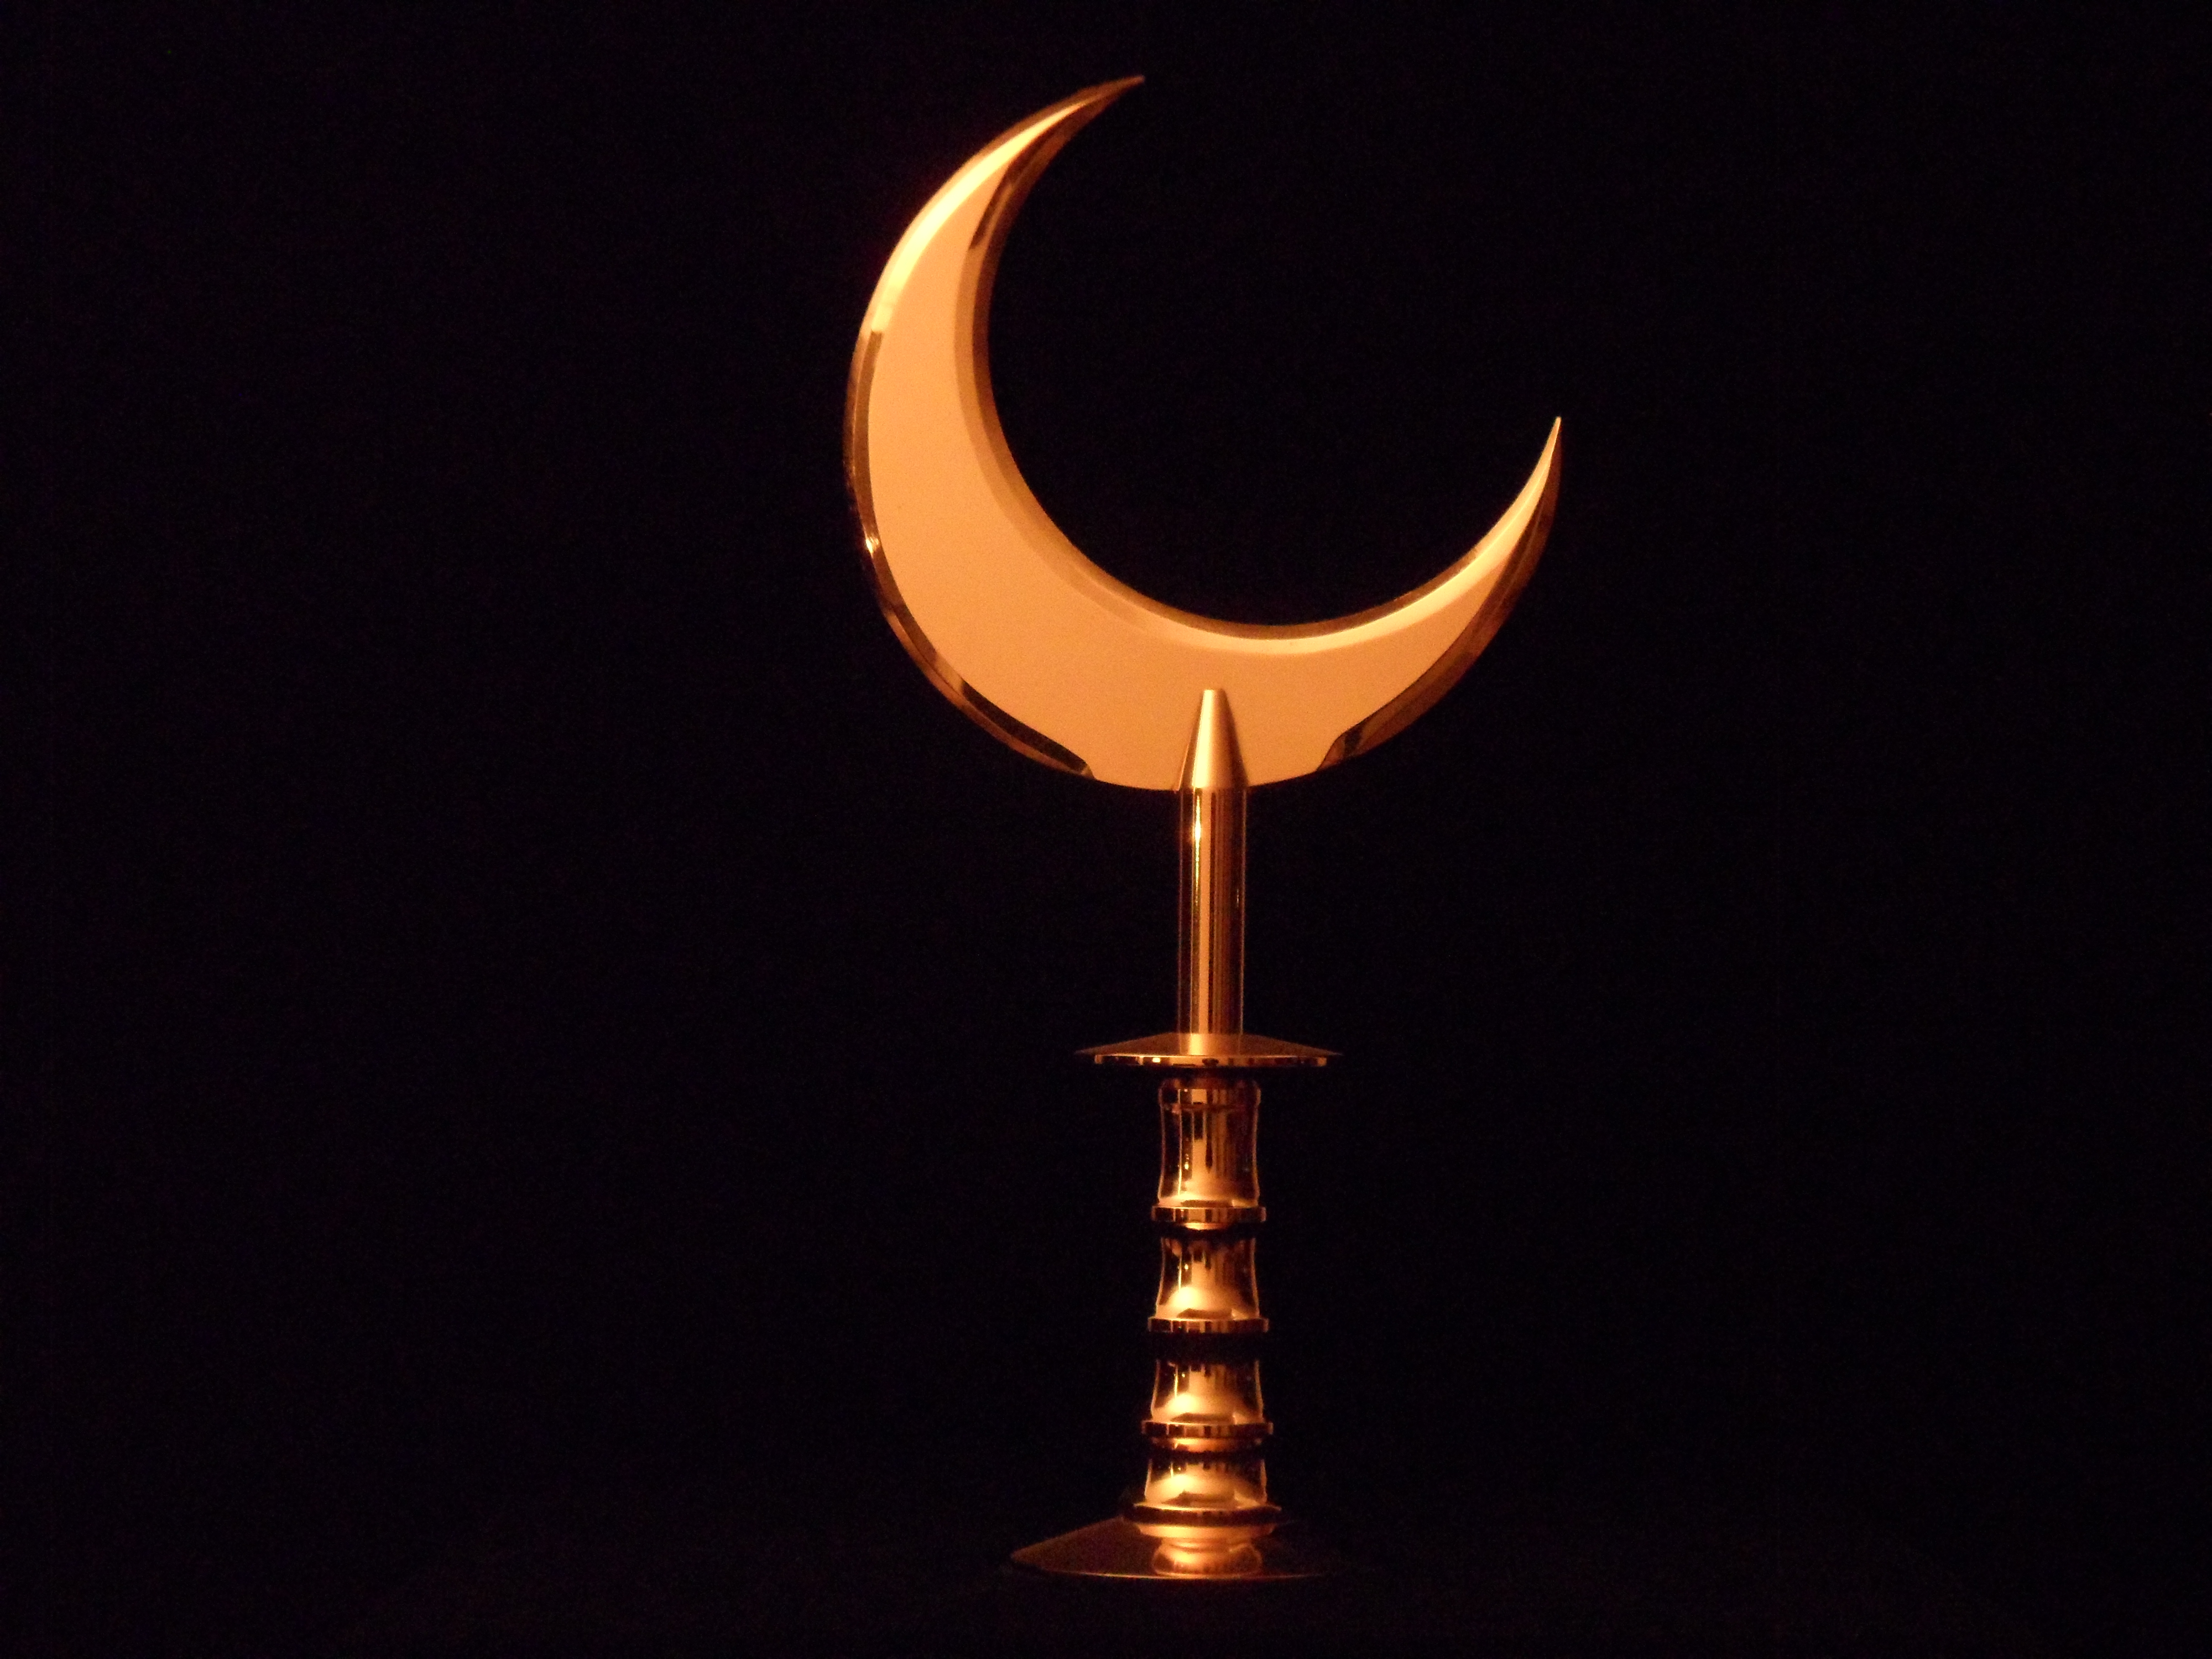 The Adoration De Aanbidding Islam symbol as fistweapon Islam symbool als vuistwapen Gold plated steel